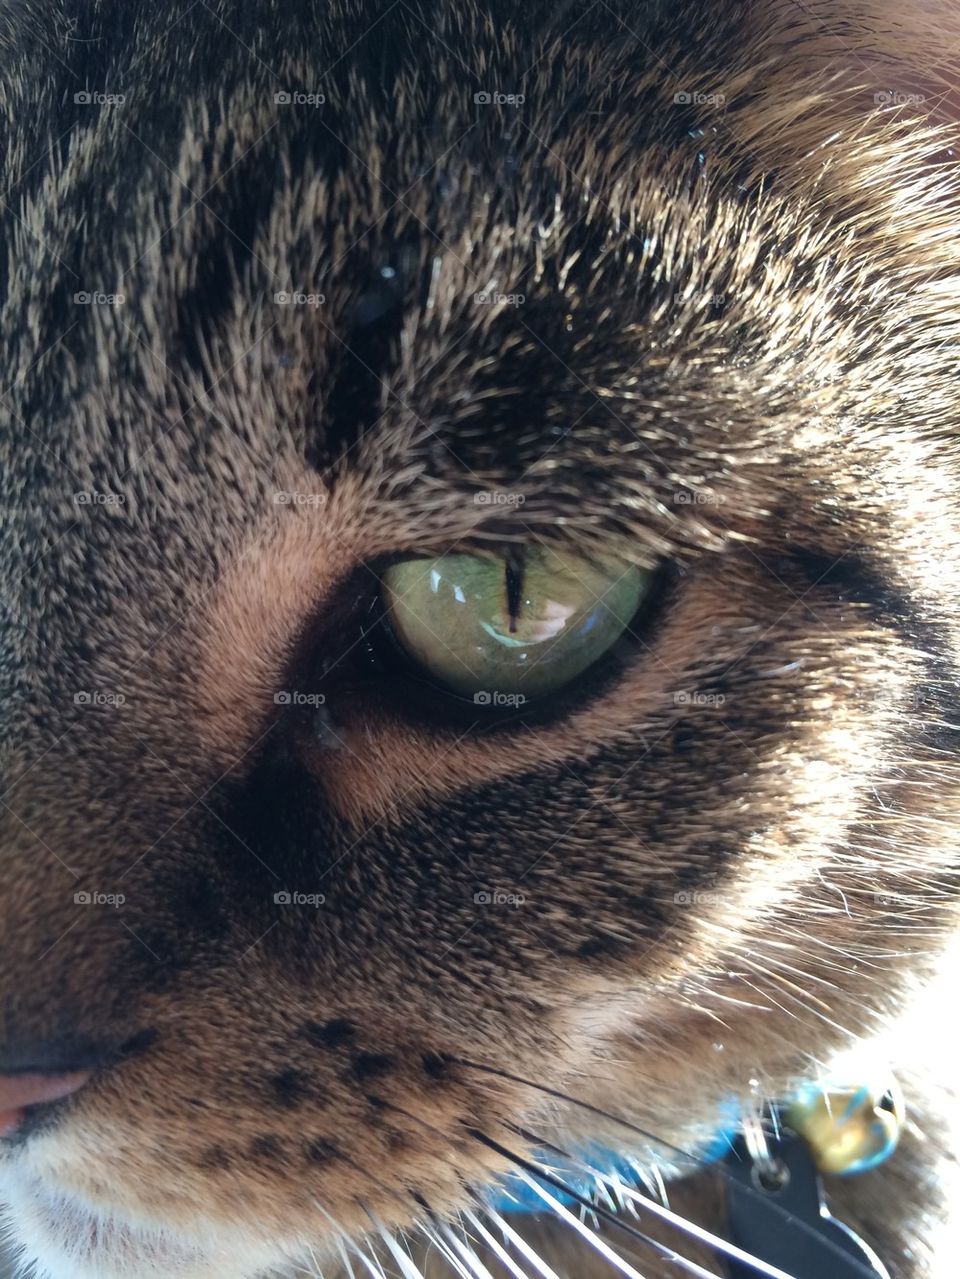 The cat's eye